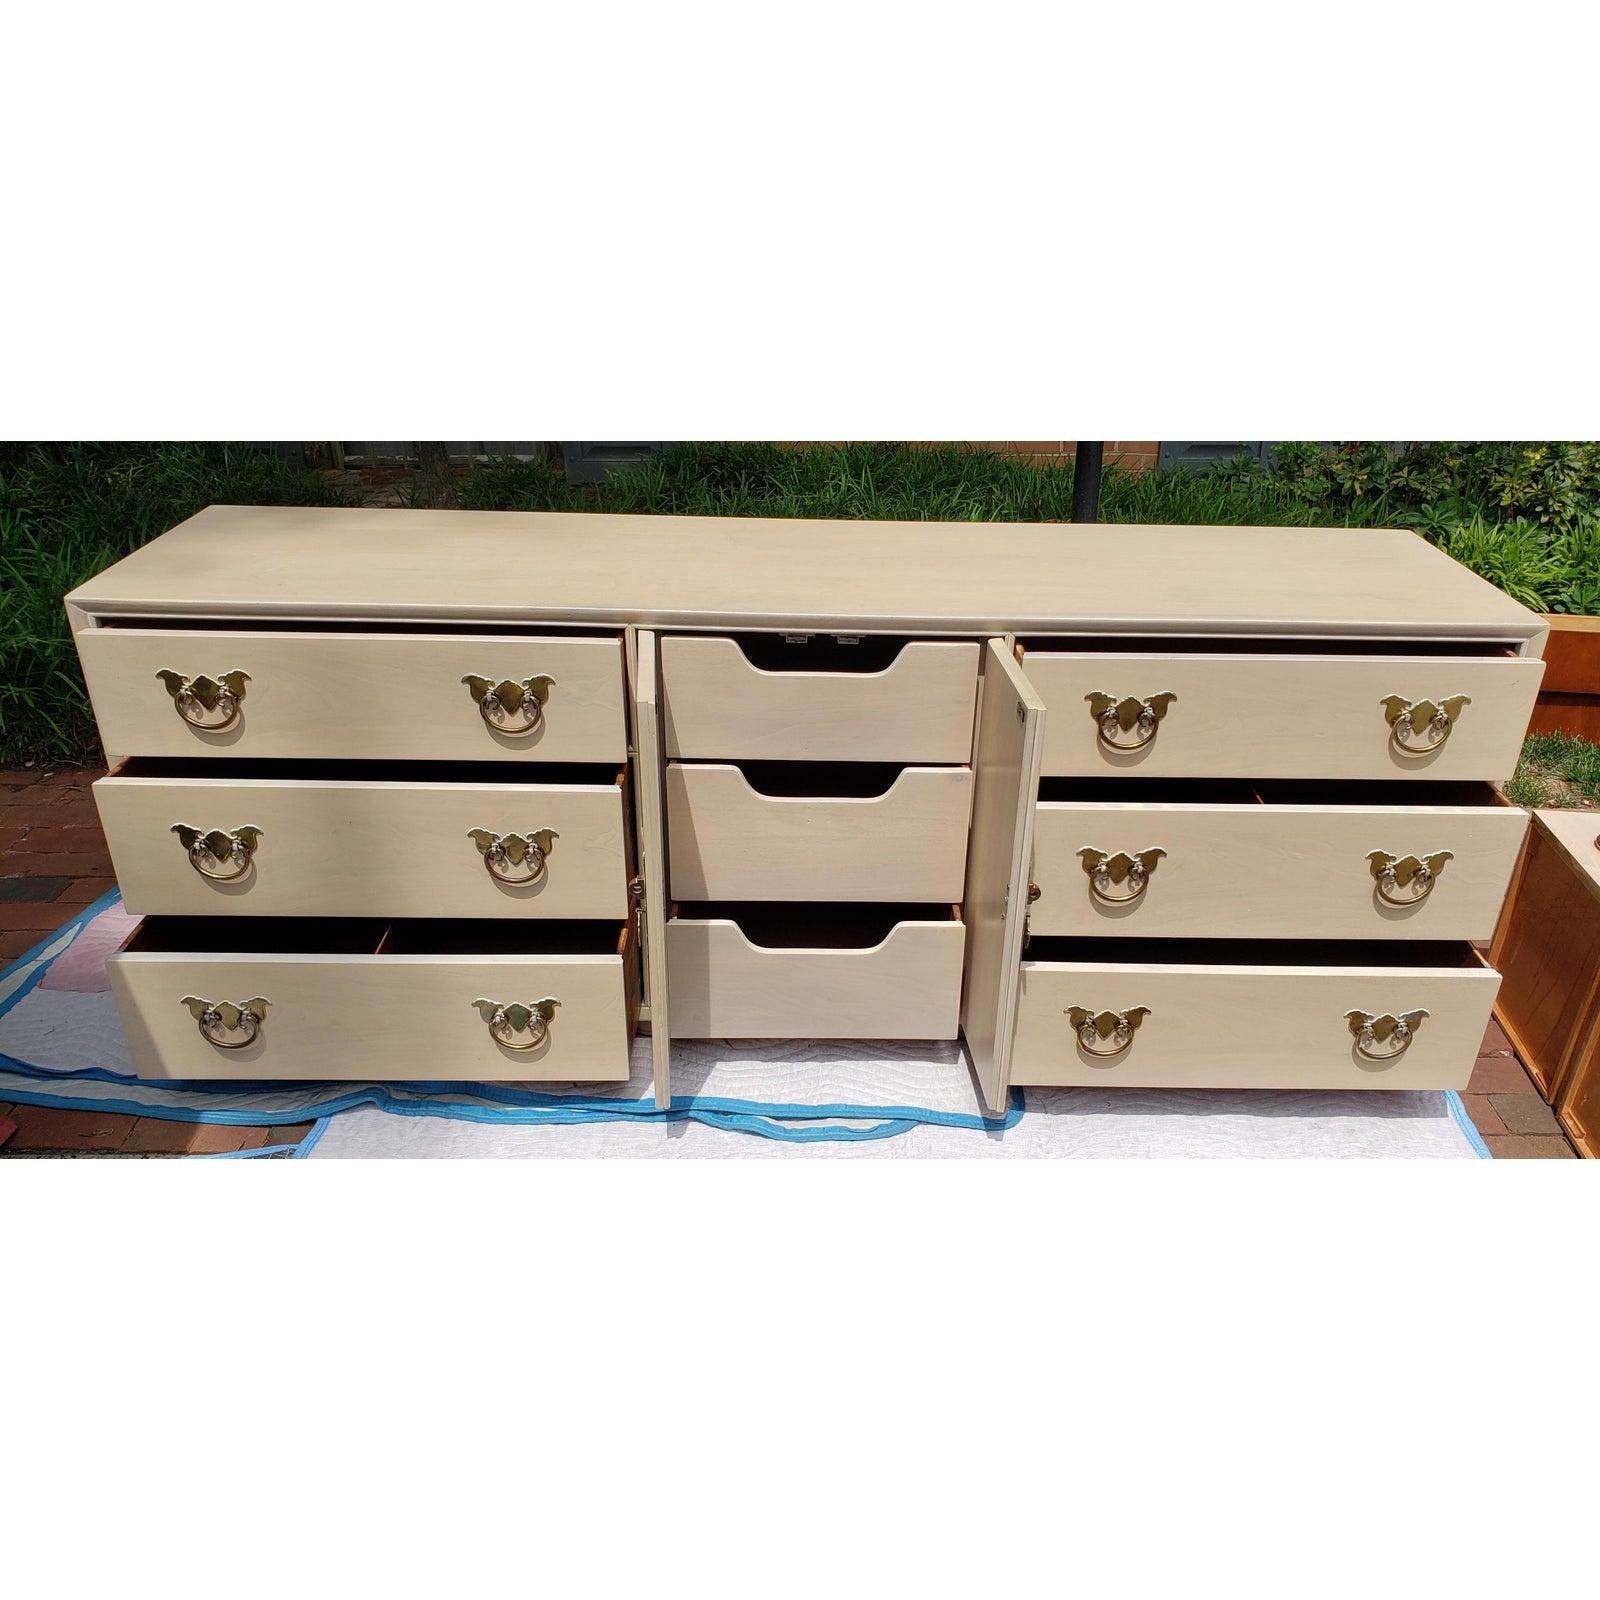 Vintage Henredon pan Asian campaign 9 drawer 2 door dresser sideboard with brass hardware. Original finish & hardware.

Measurements: 80W x 19D x 30H.
 